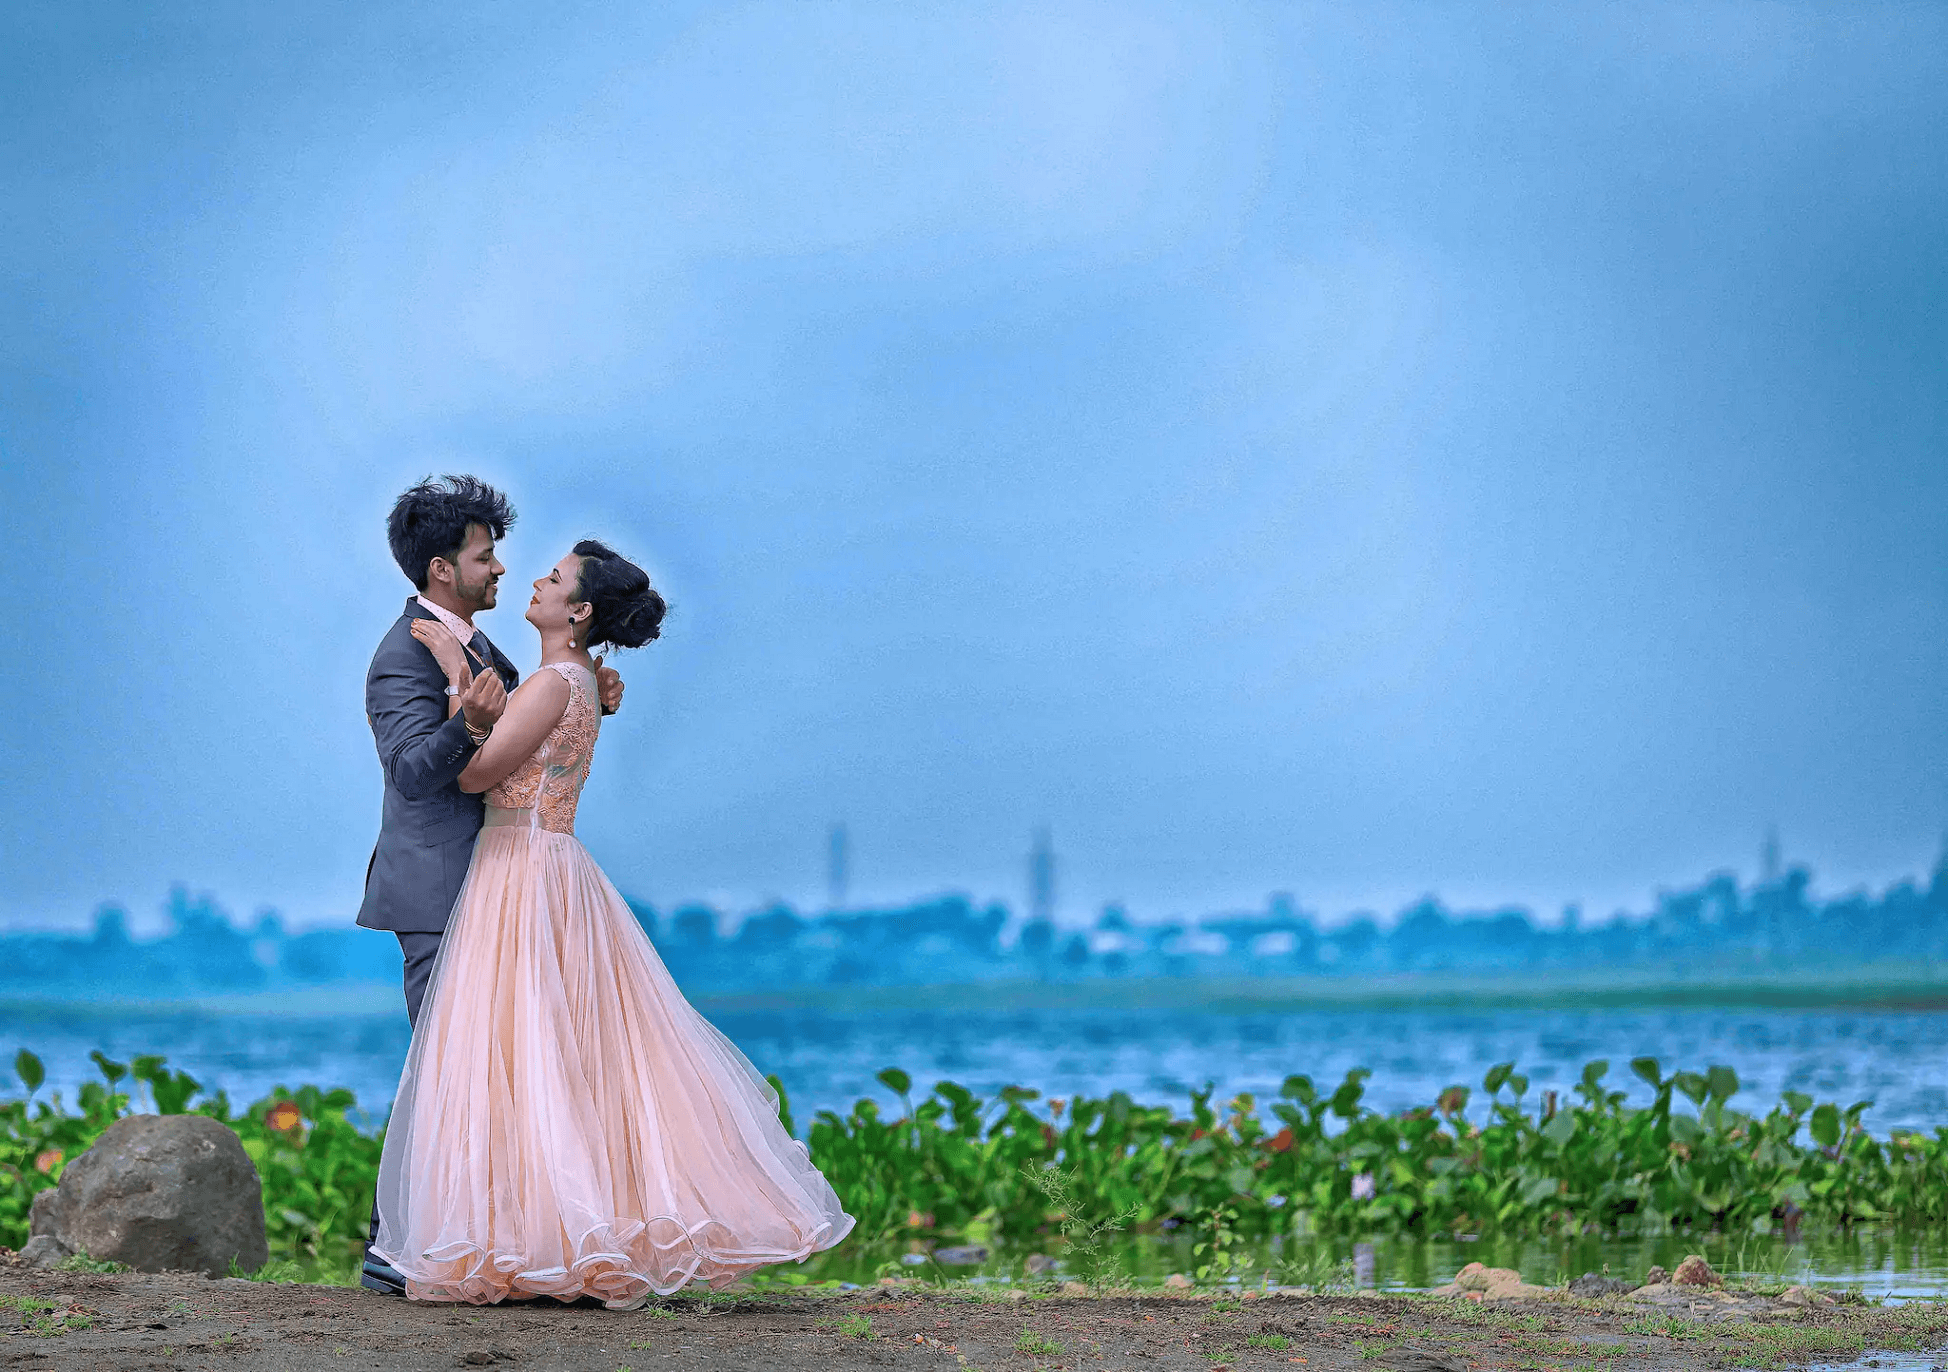 wedding poses for couple | Best Wedding Photography Poses | wedding  photographer in patna |